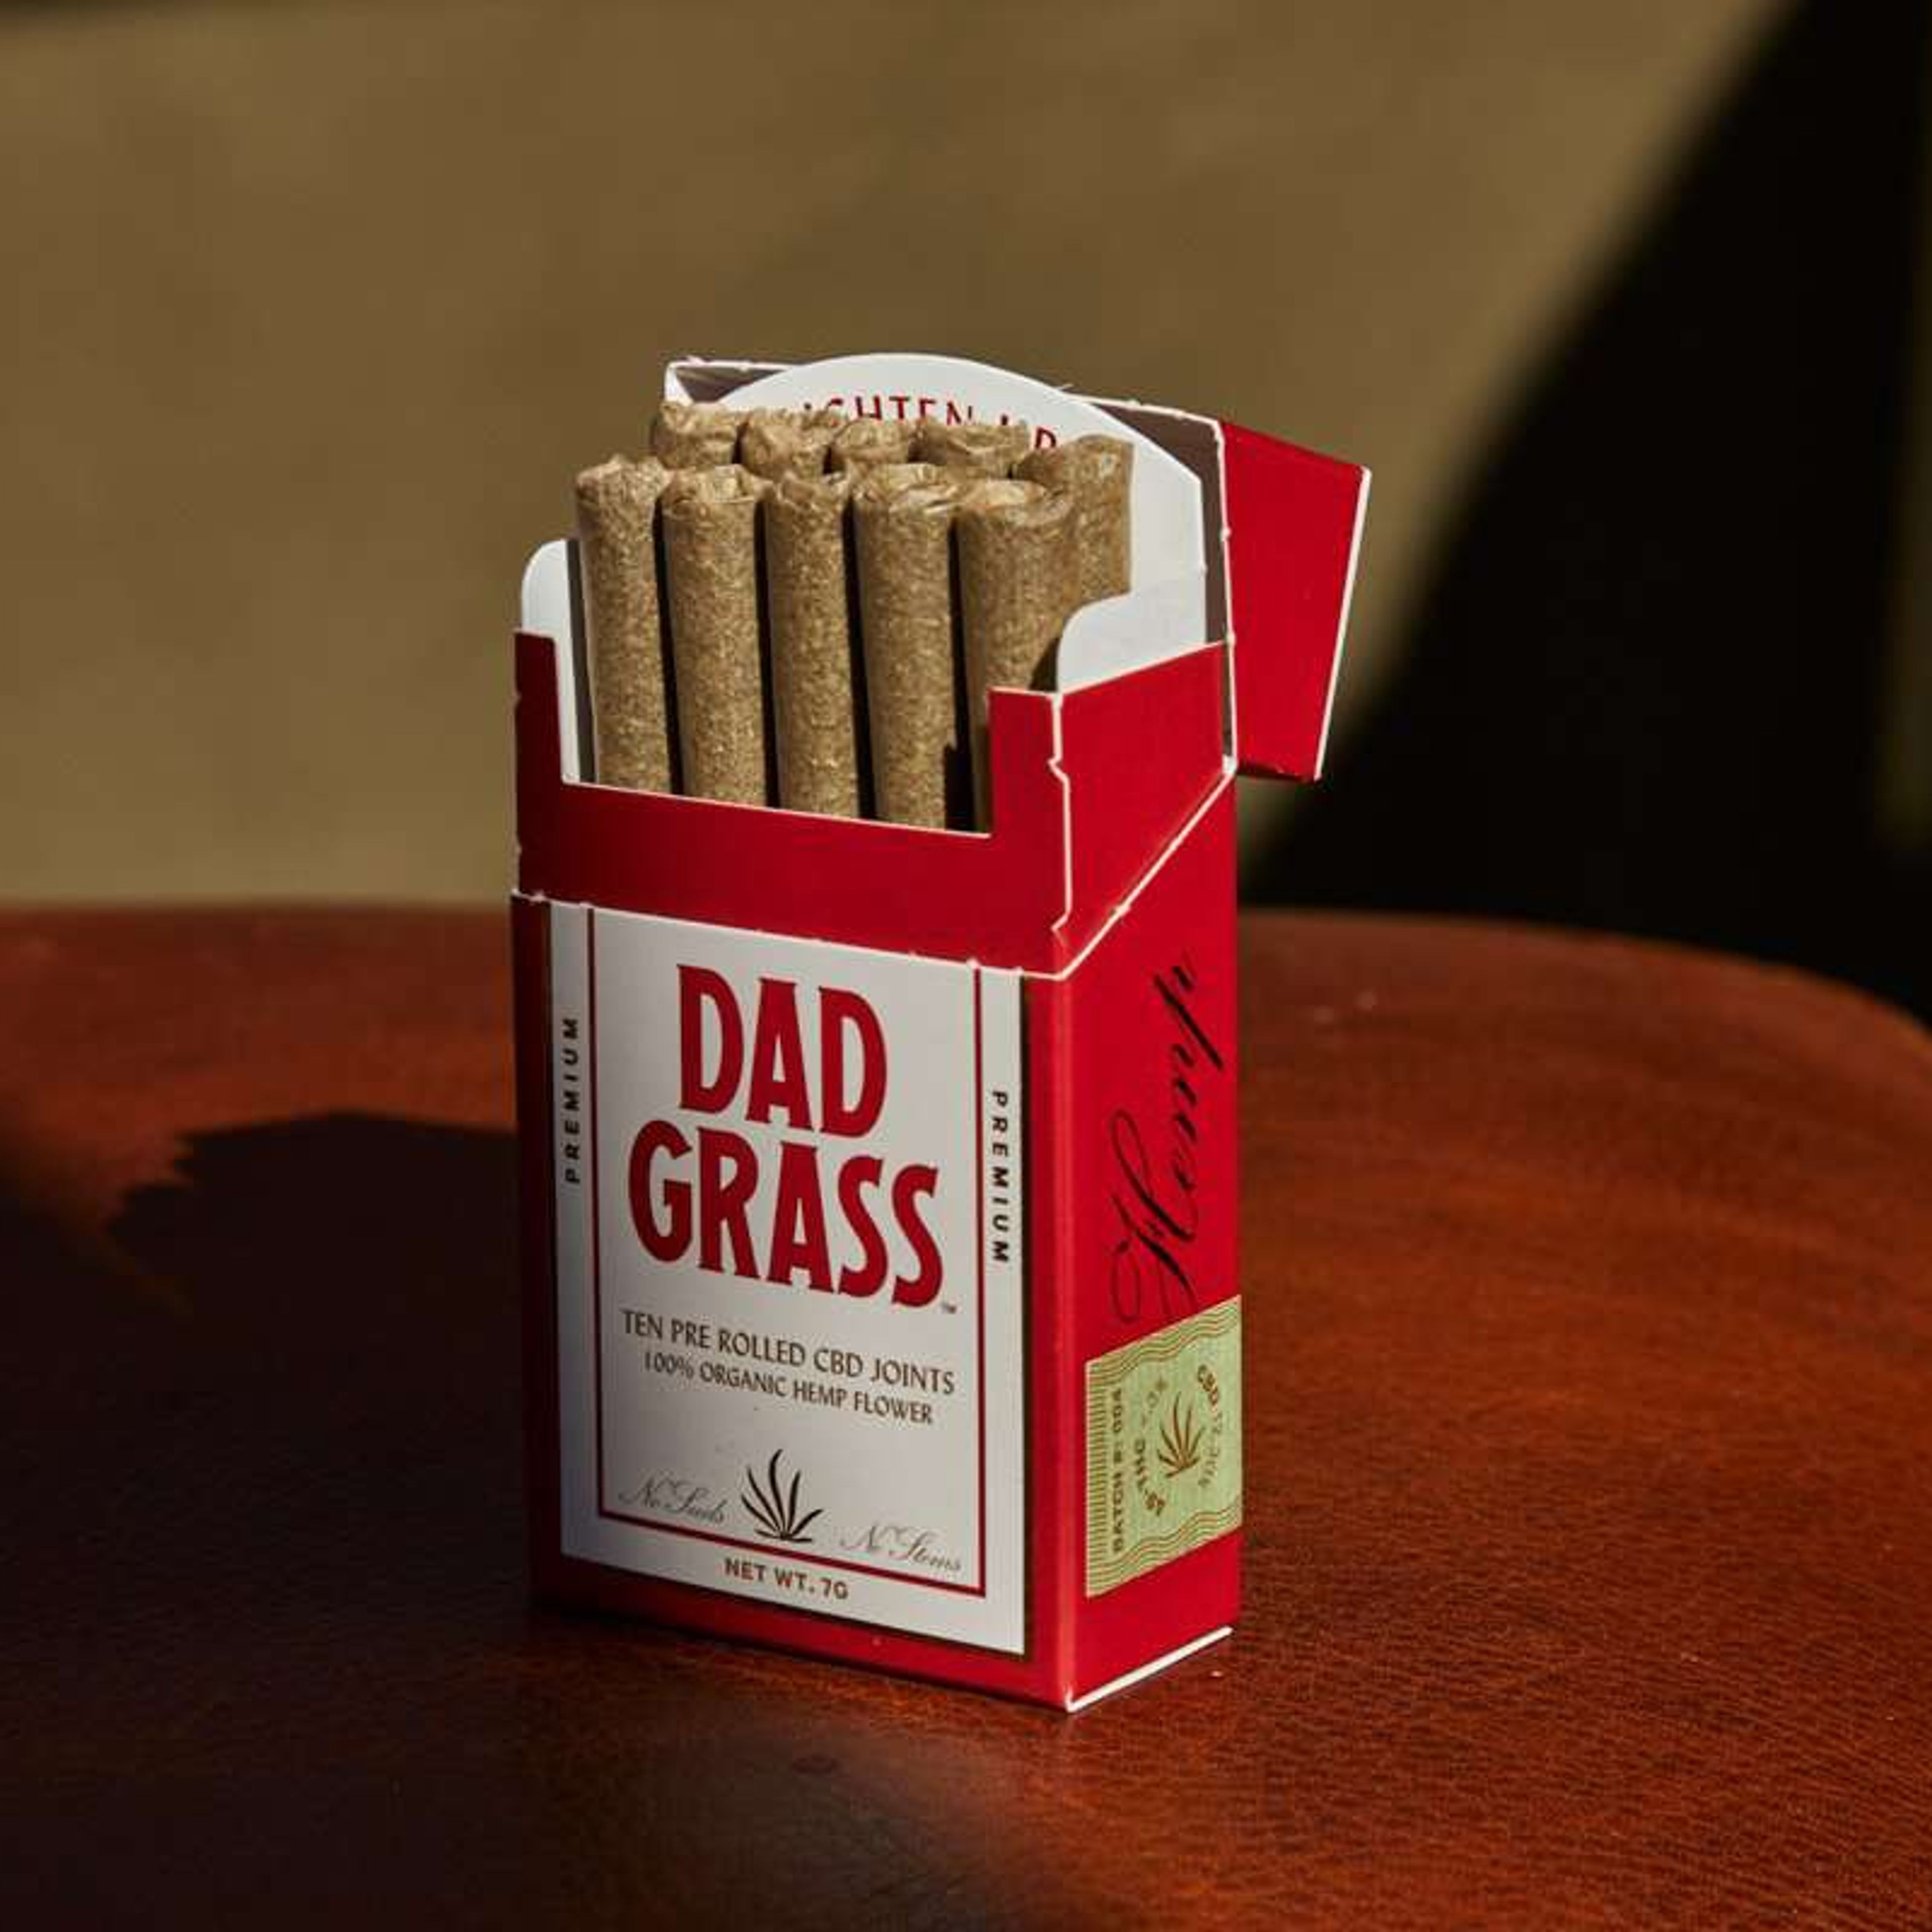 Dad Grass Hemp CBD Pre Rolled Joints 10 Pack